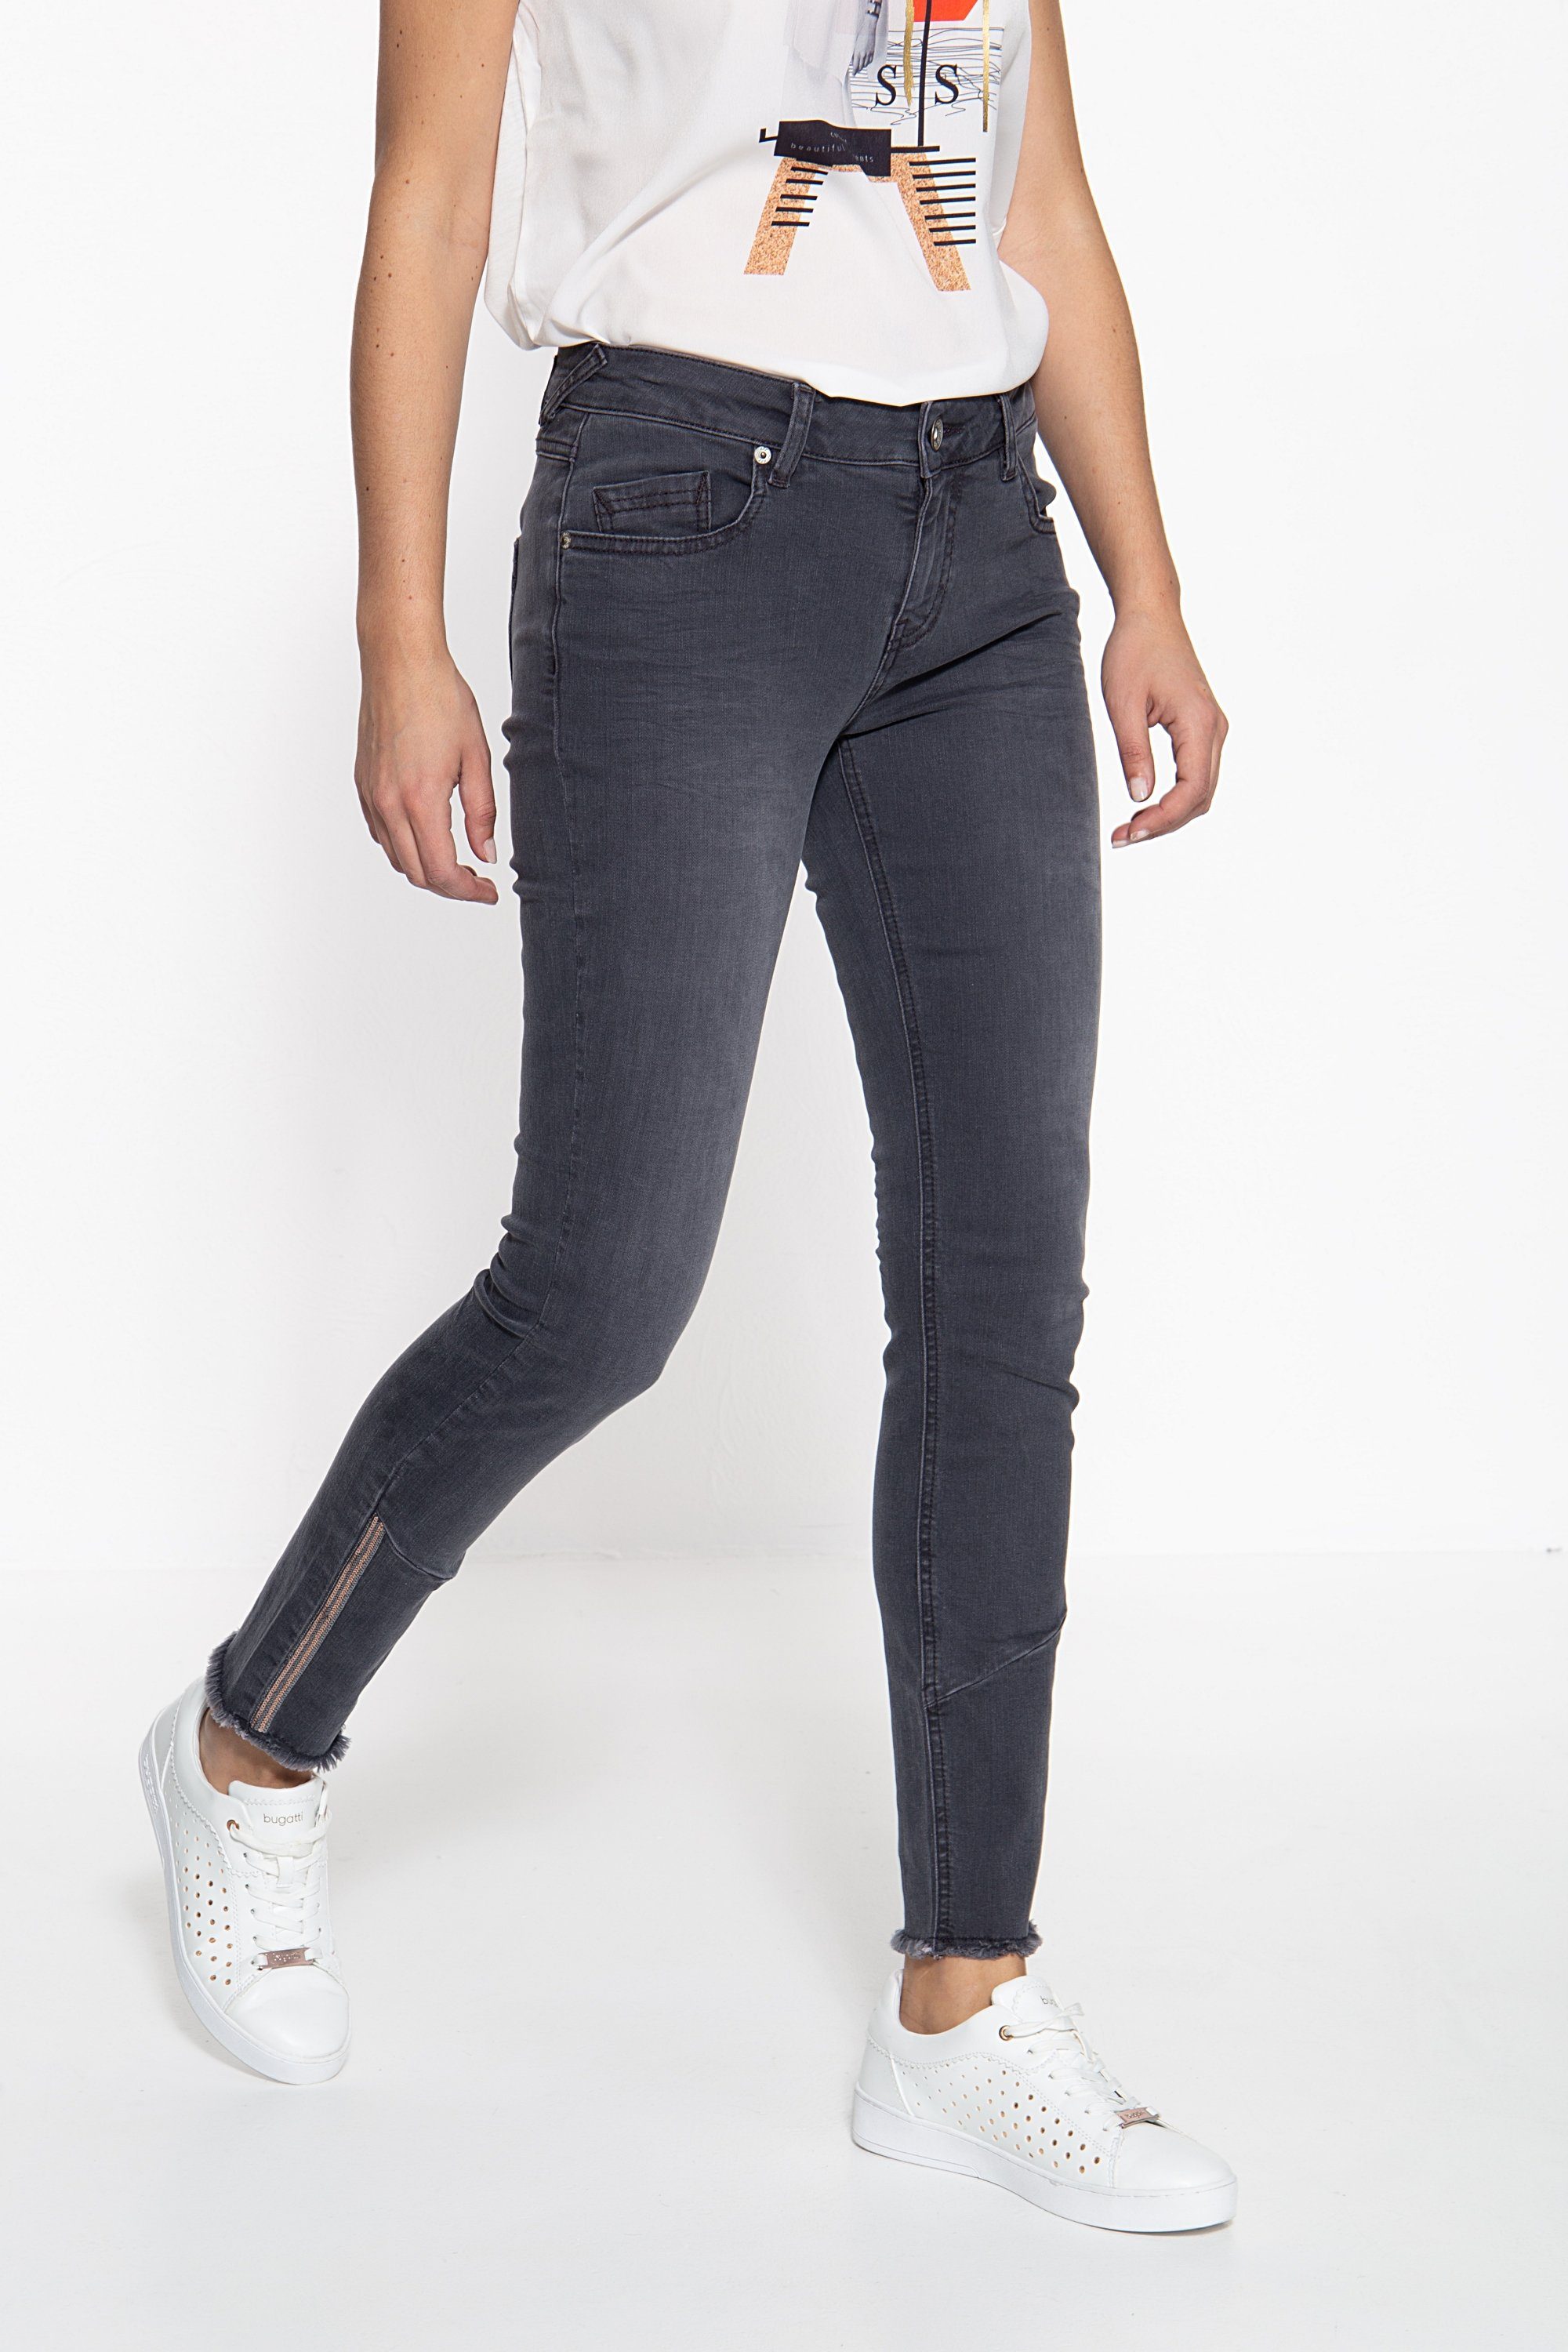 Damen Jeans ATT Jeans Slim-fit-Jeans Leoni mit offenen Saumkanten und Paillettendetails